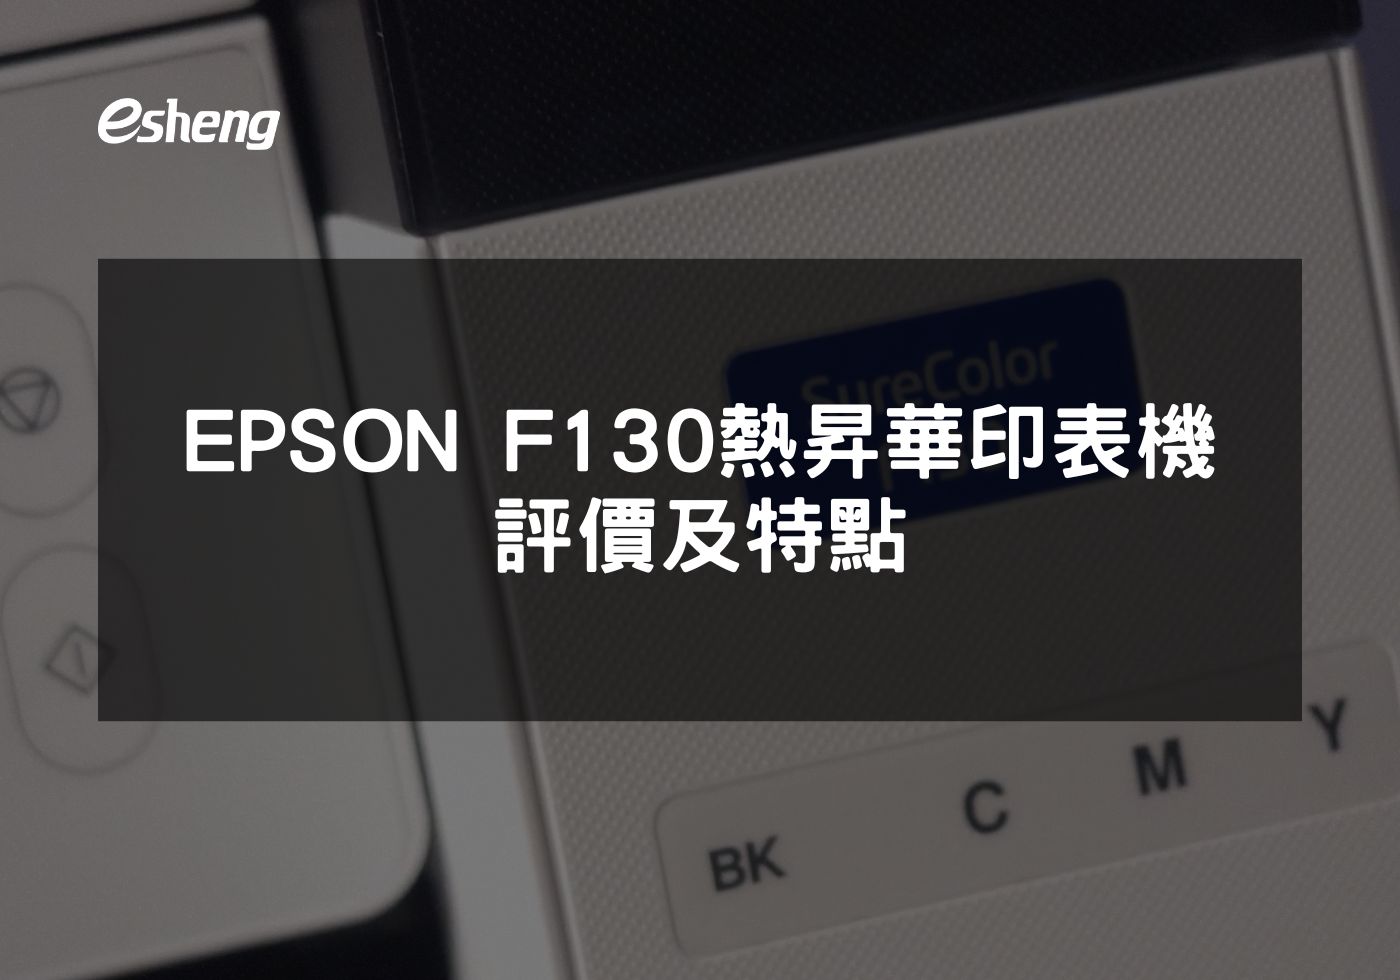 EPSON F130熱昇華印表機提升印刷品質與效率